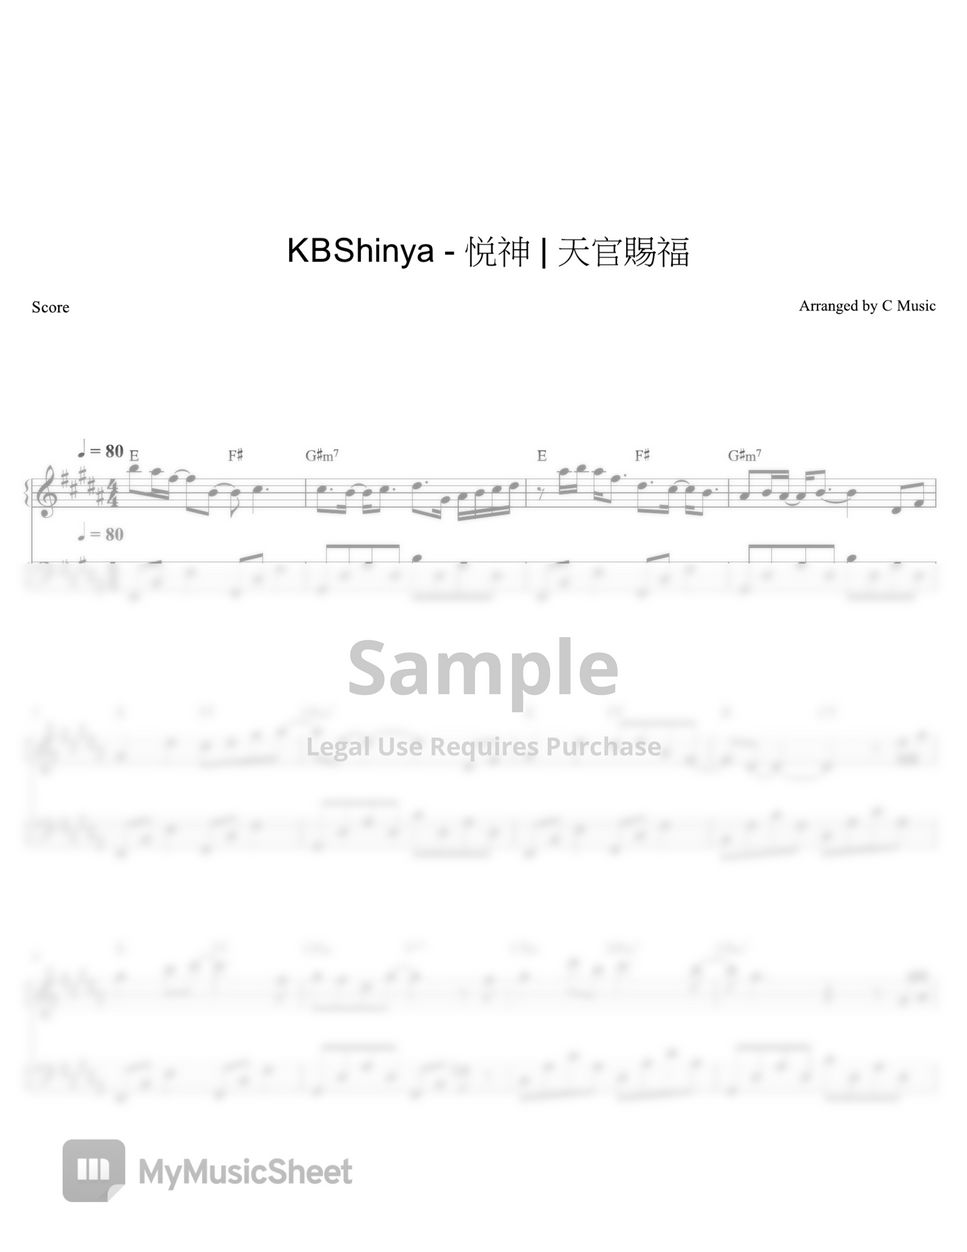 KBShinya | 陳亦洺, 红衣 - 悦神 (天官赐福同人曲) by C Music